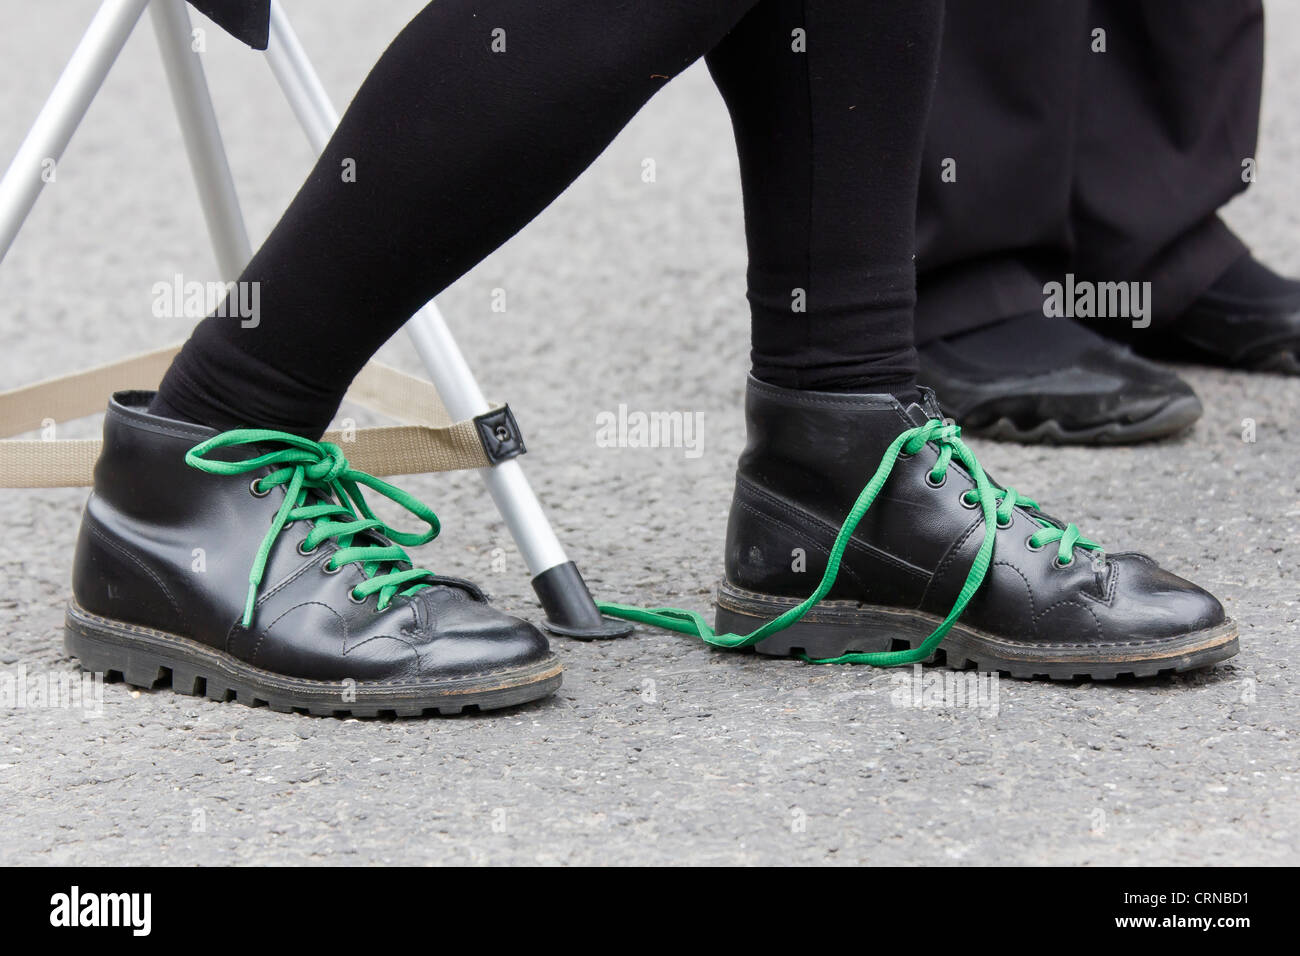 shoelaces come untied